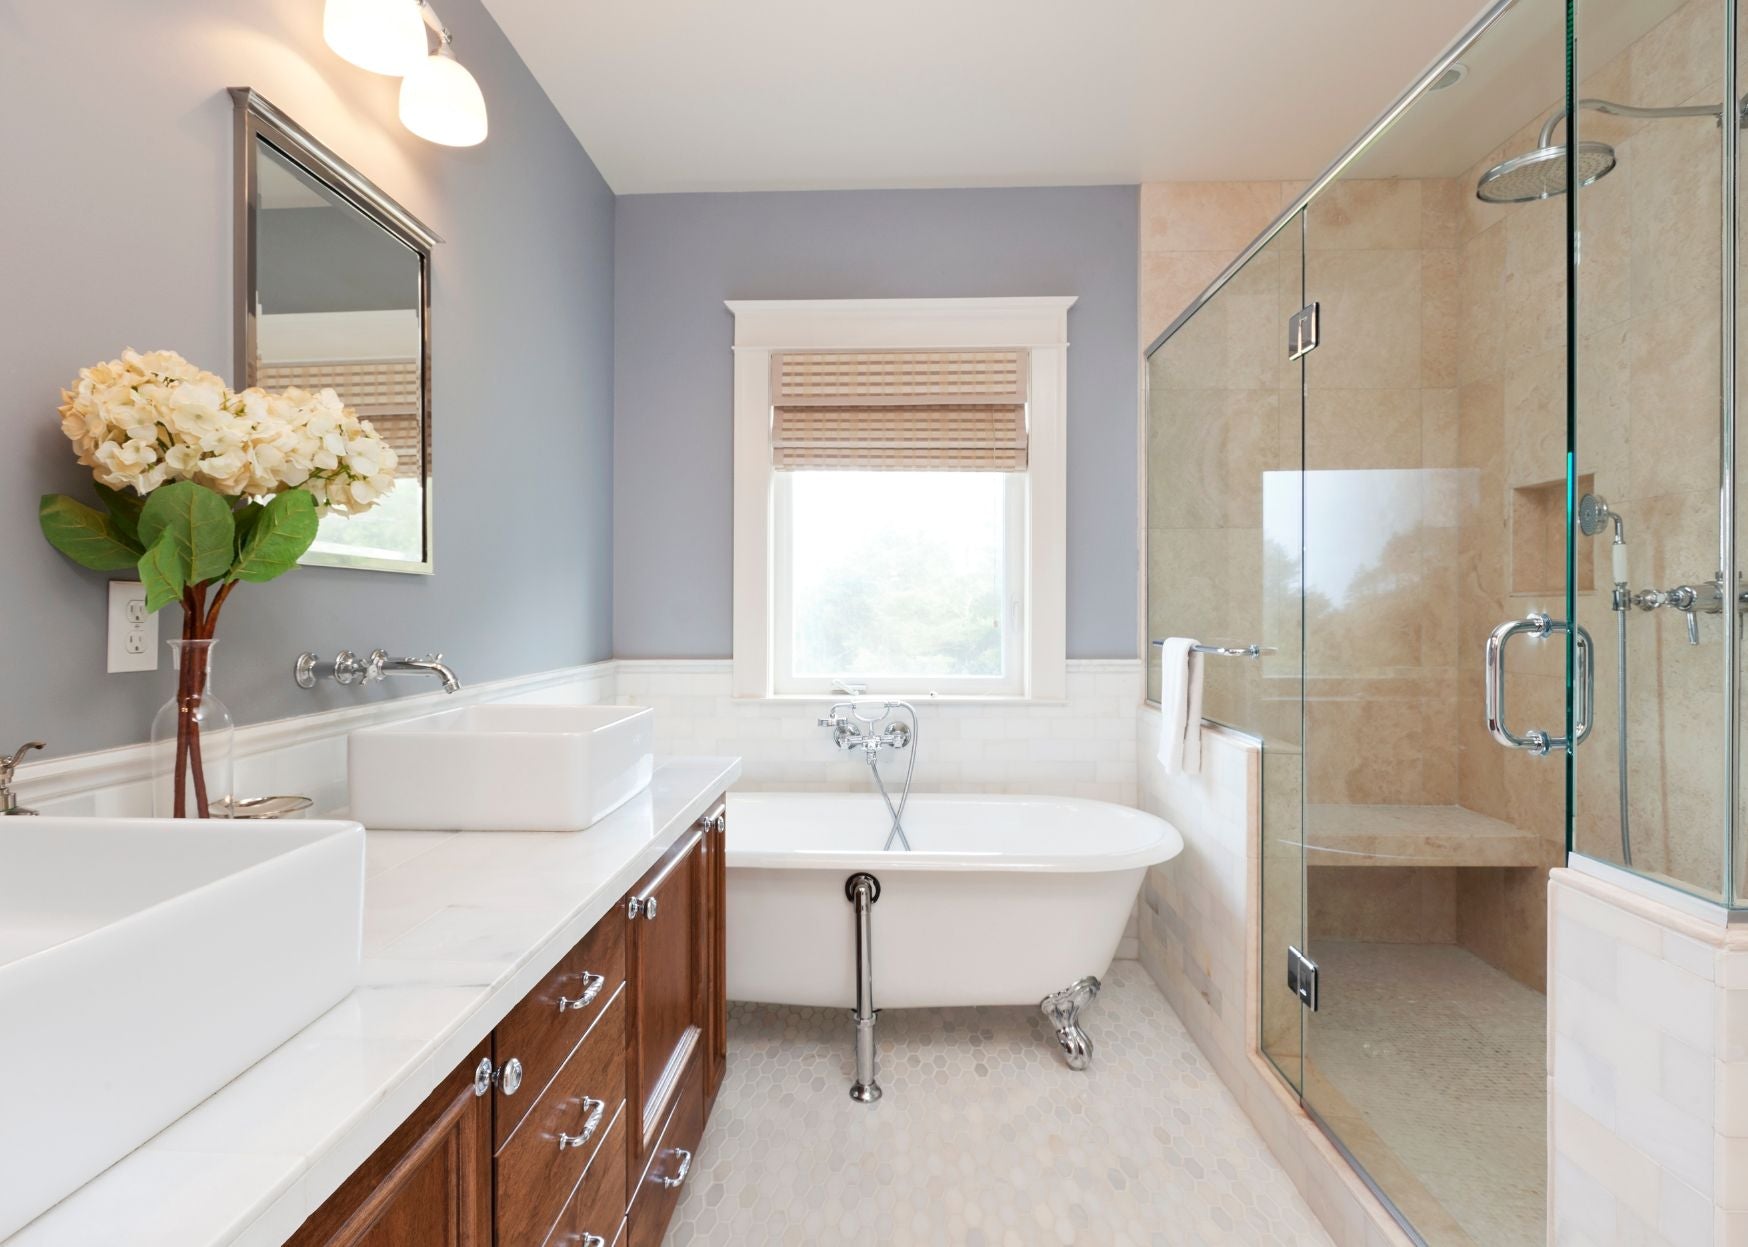 How to Avoid Common Bathroom Renovation Mistakes